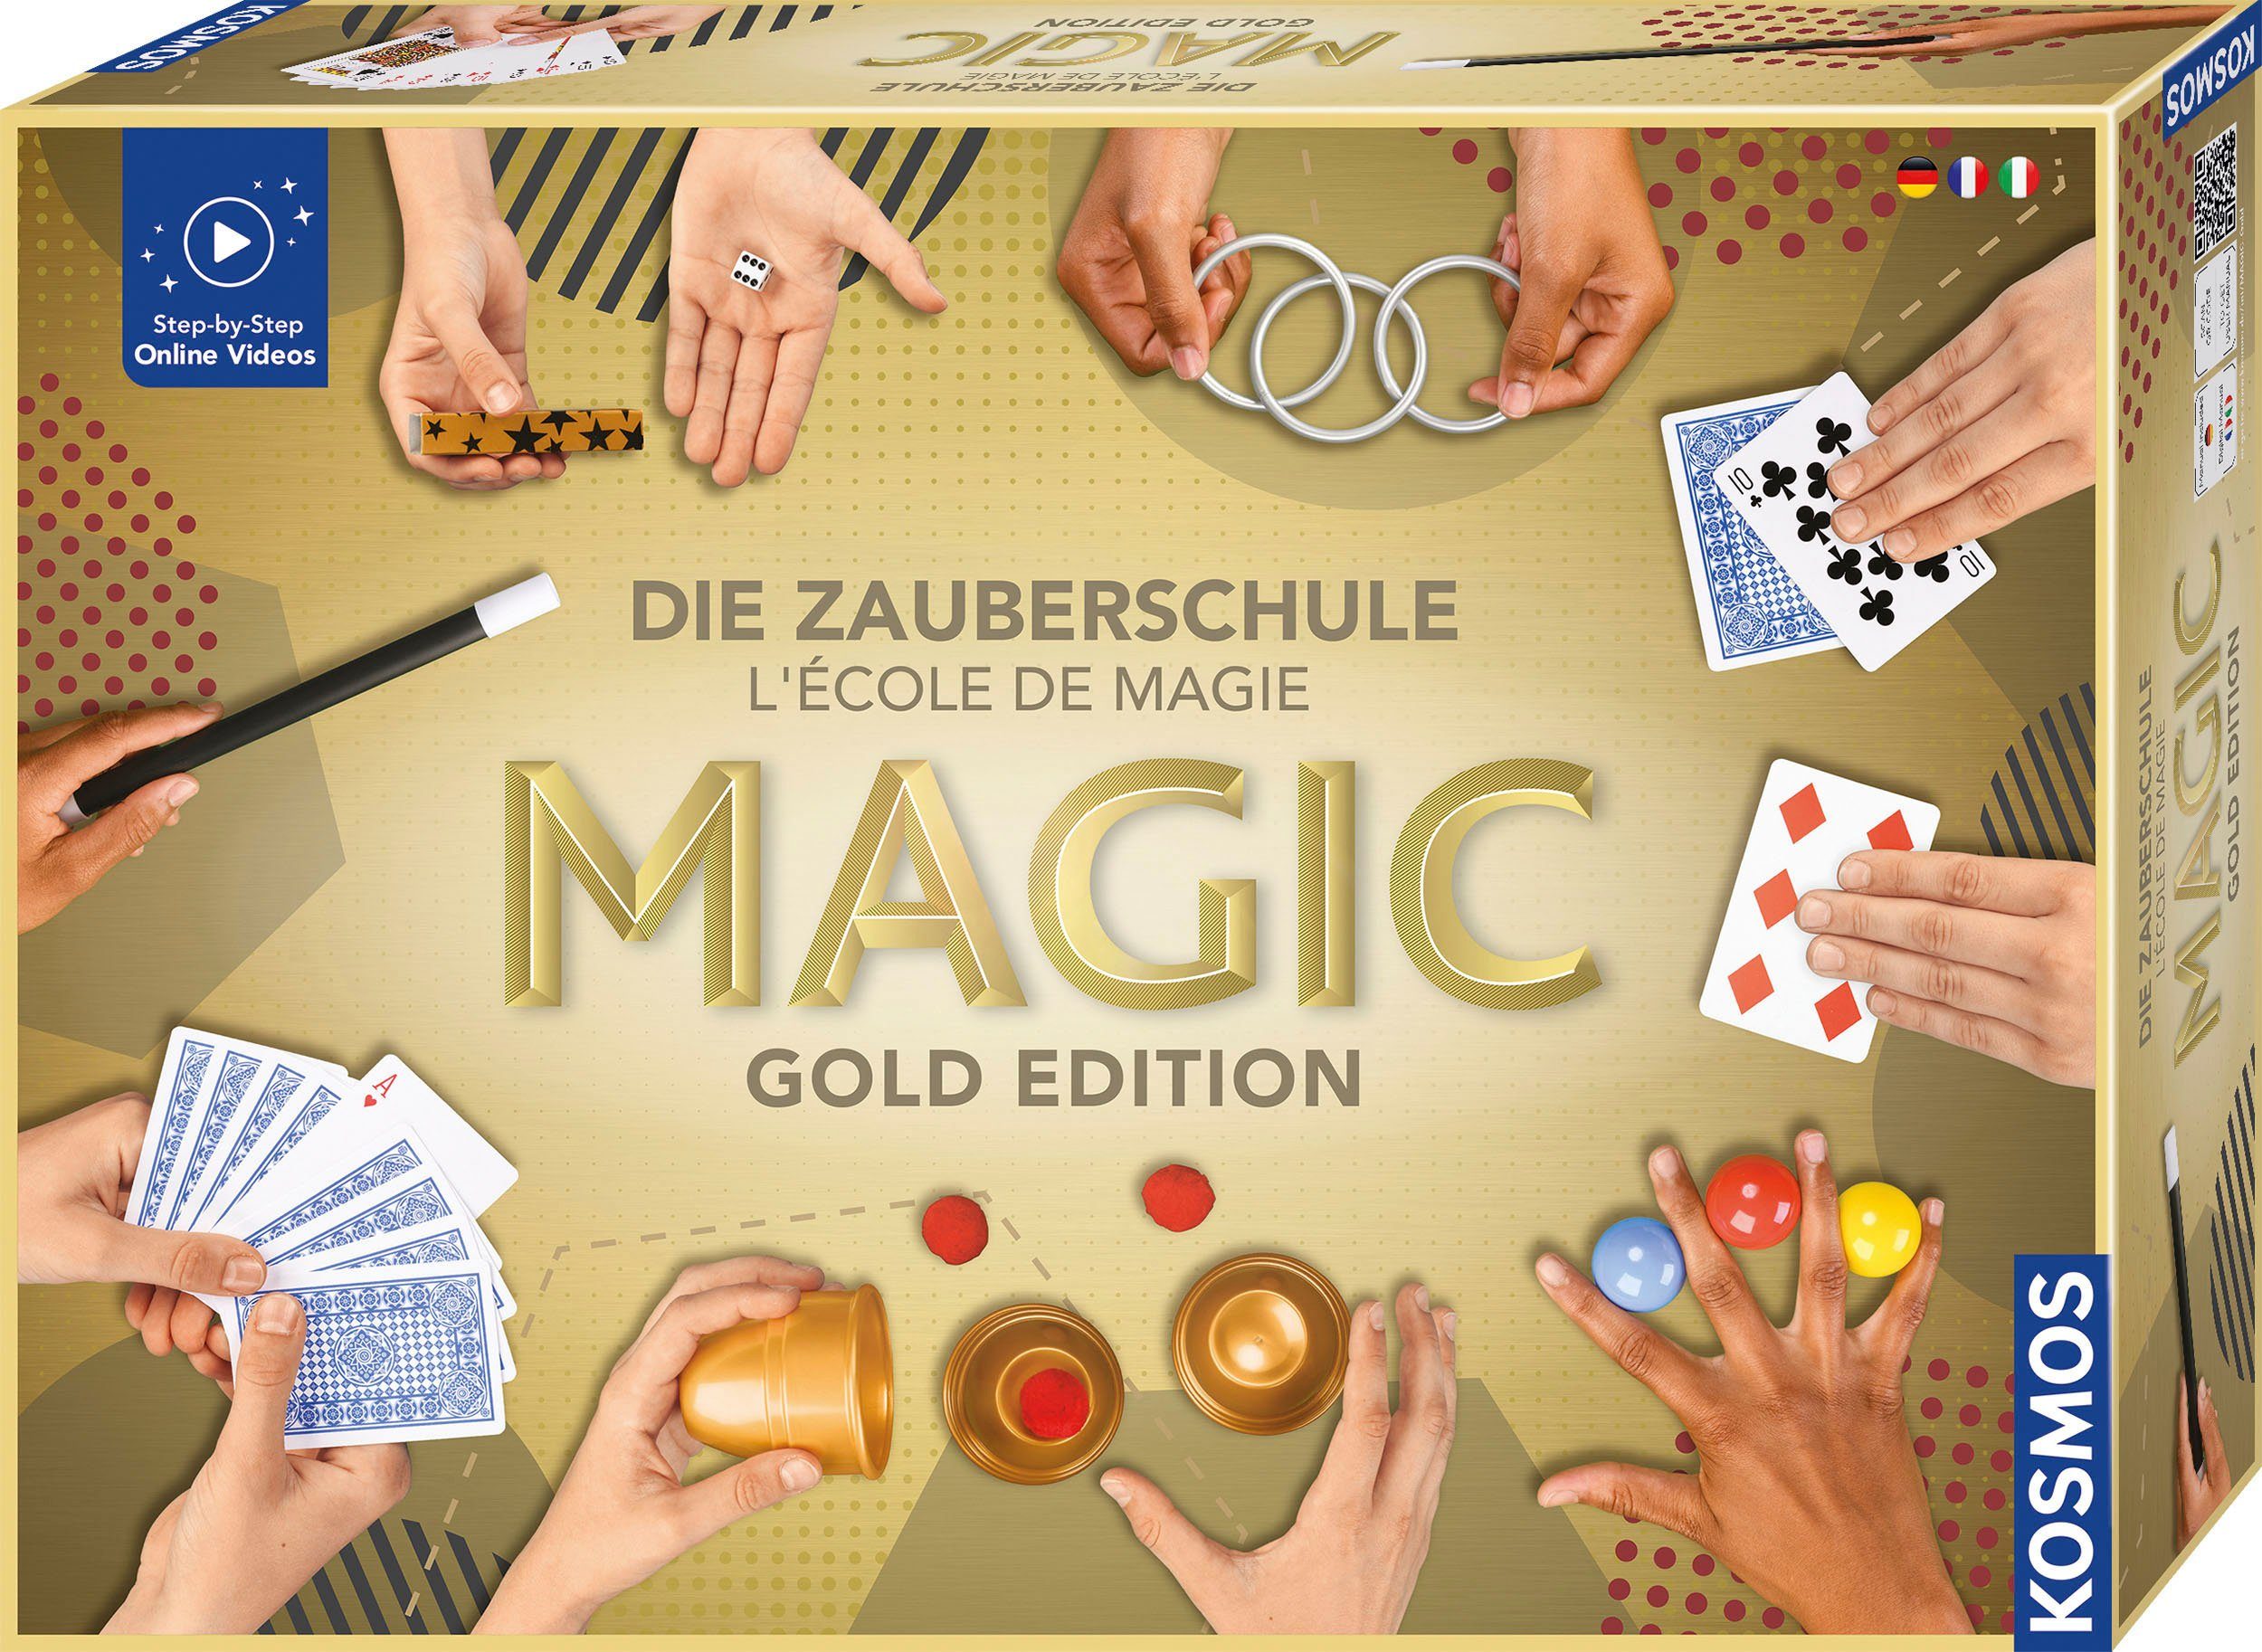 Kosmos Zauberkasten Die Zauberschule Magic - Gold Edition DFI | Zauberkästen